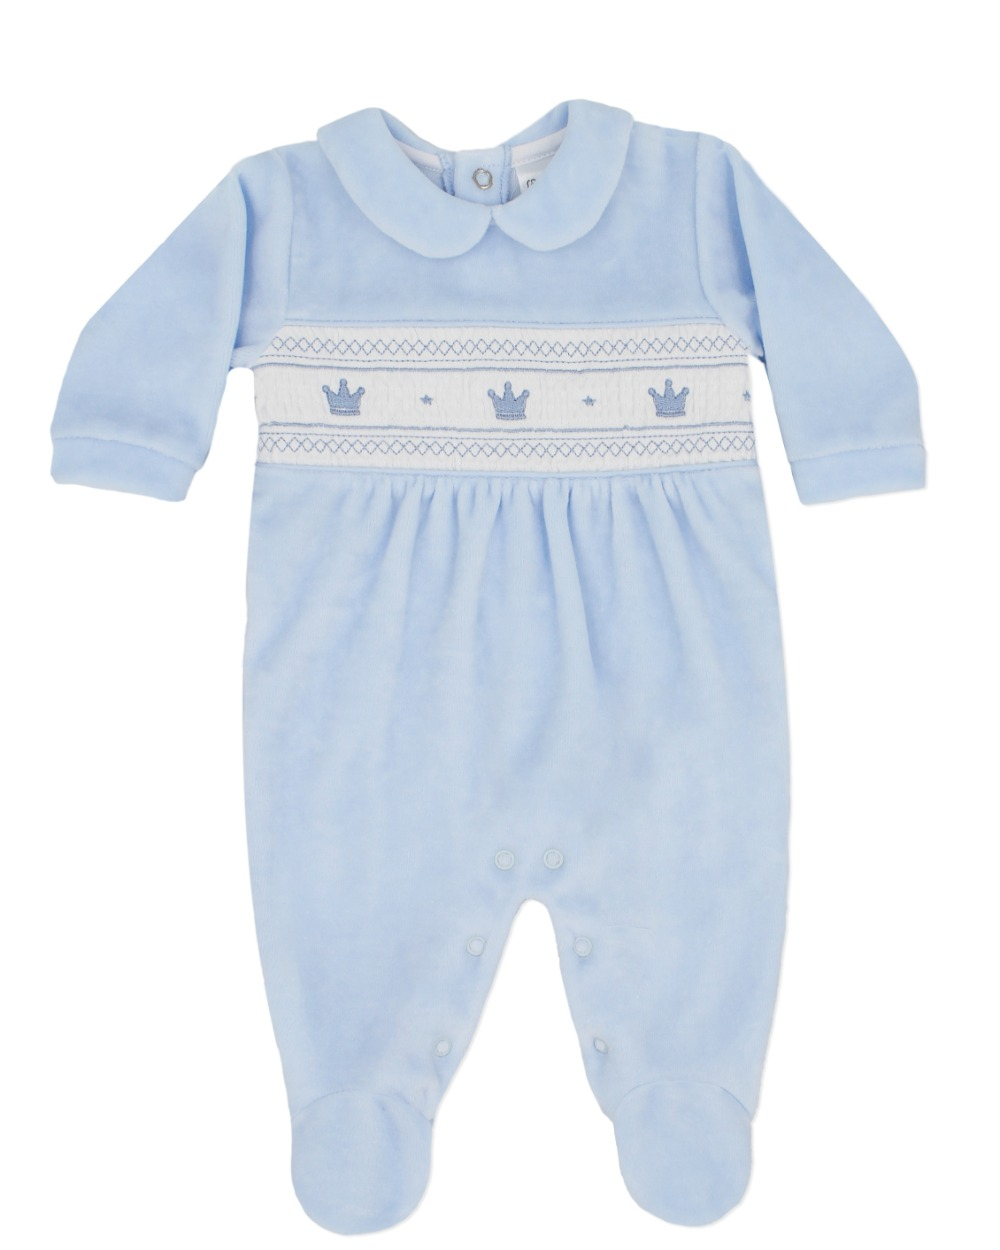 Blaues Baby-Prinzen-Outfit